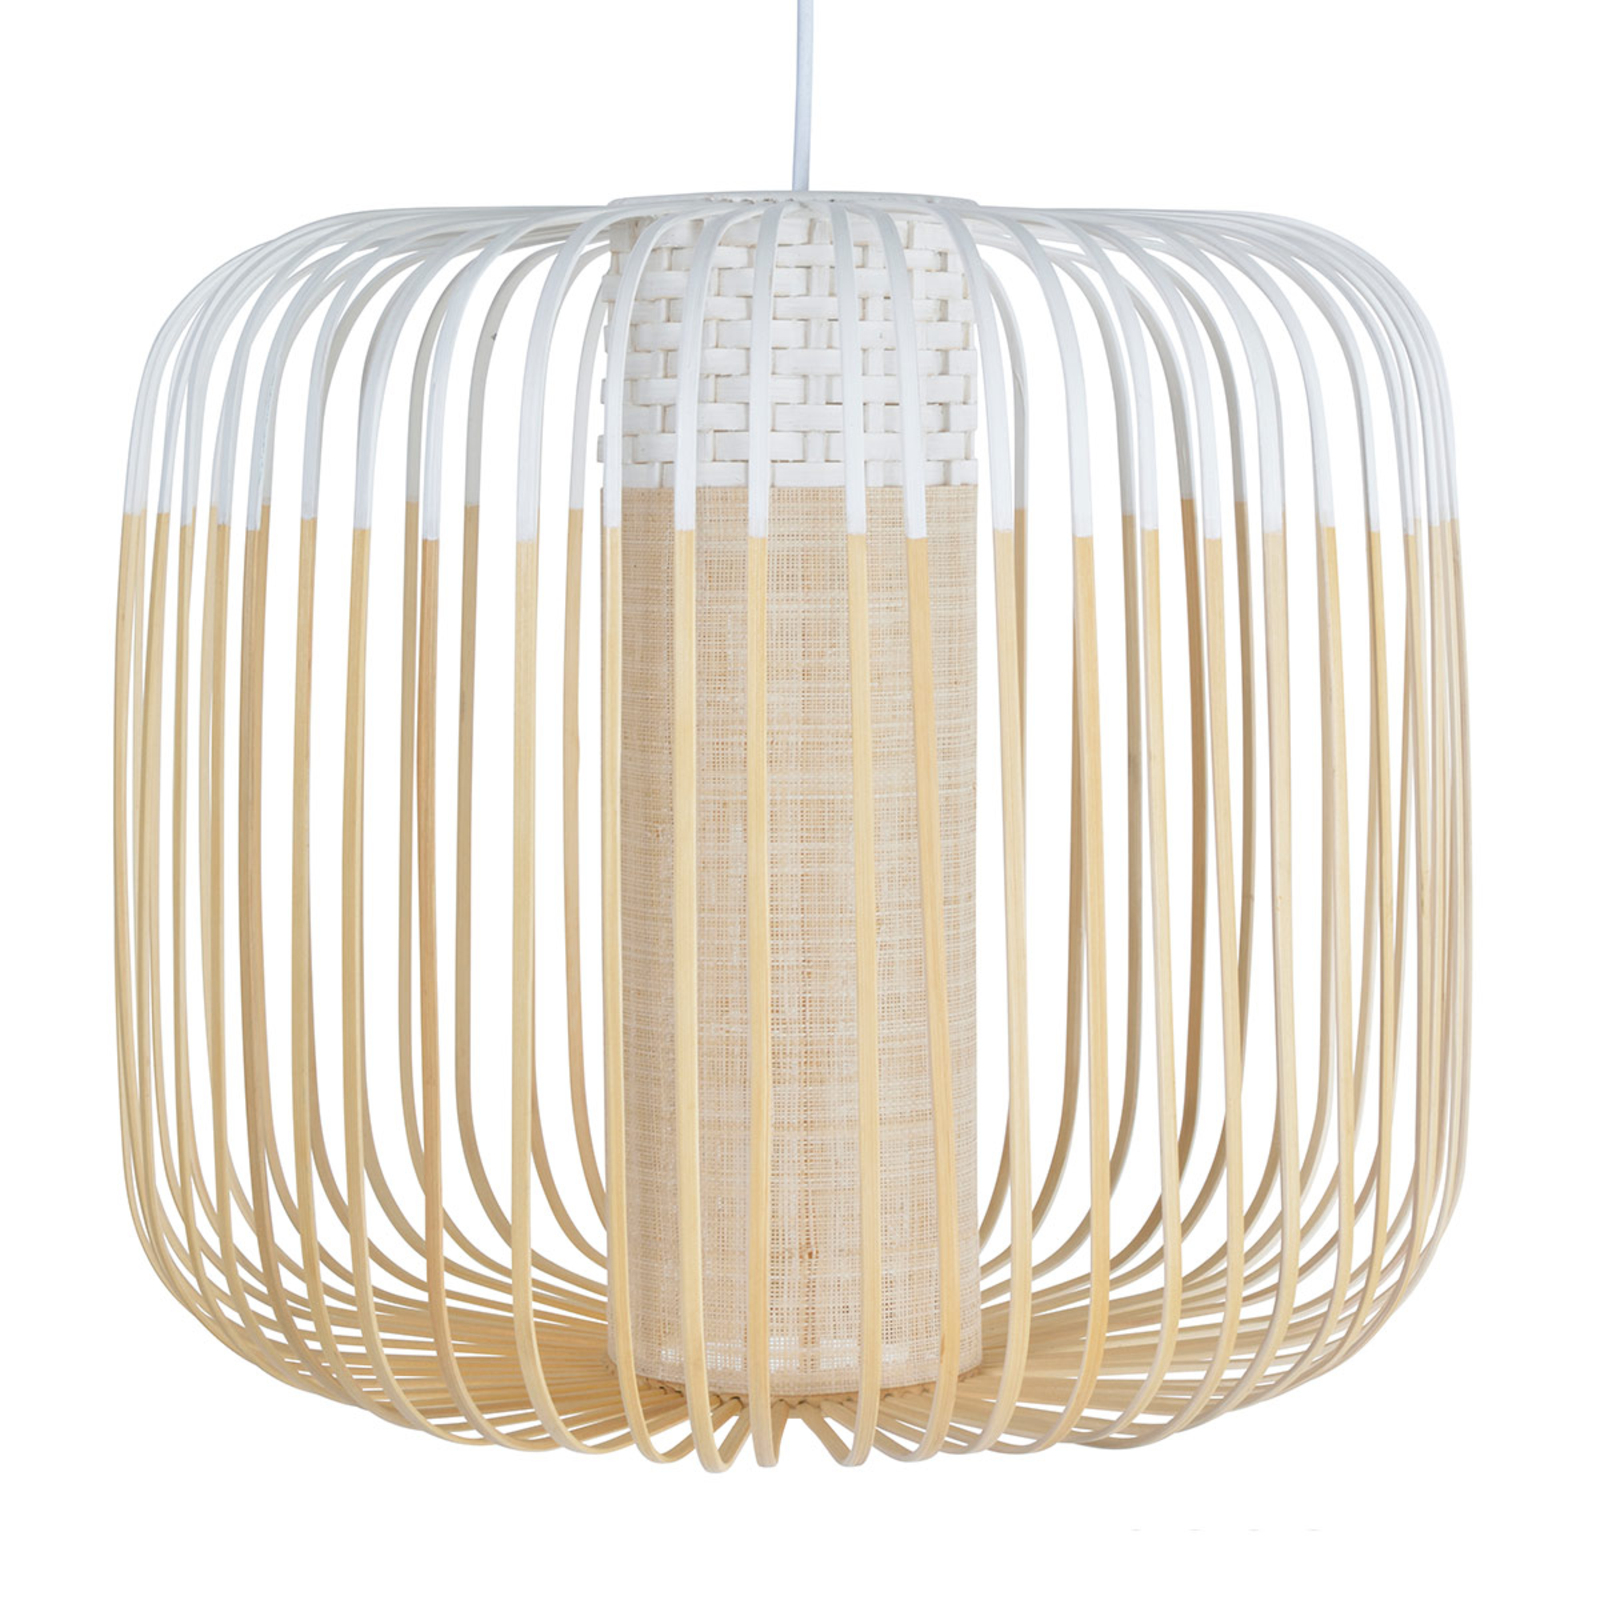 Forestier Bamboo Light M hanglamp 45 cm wit